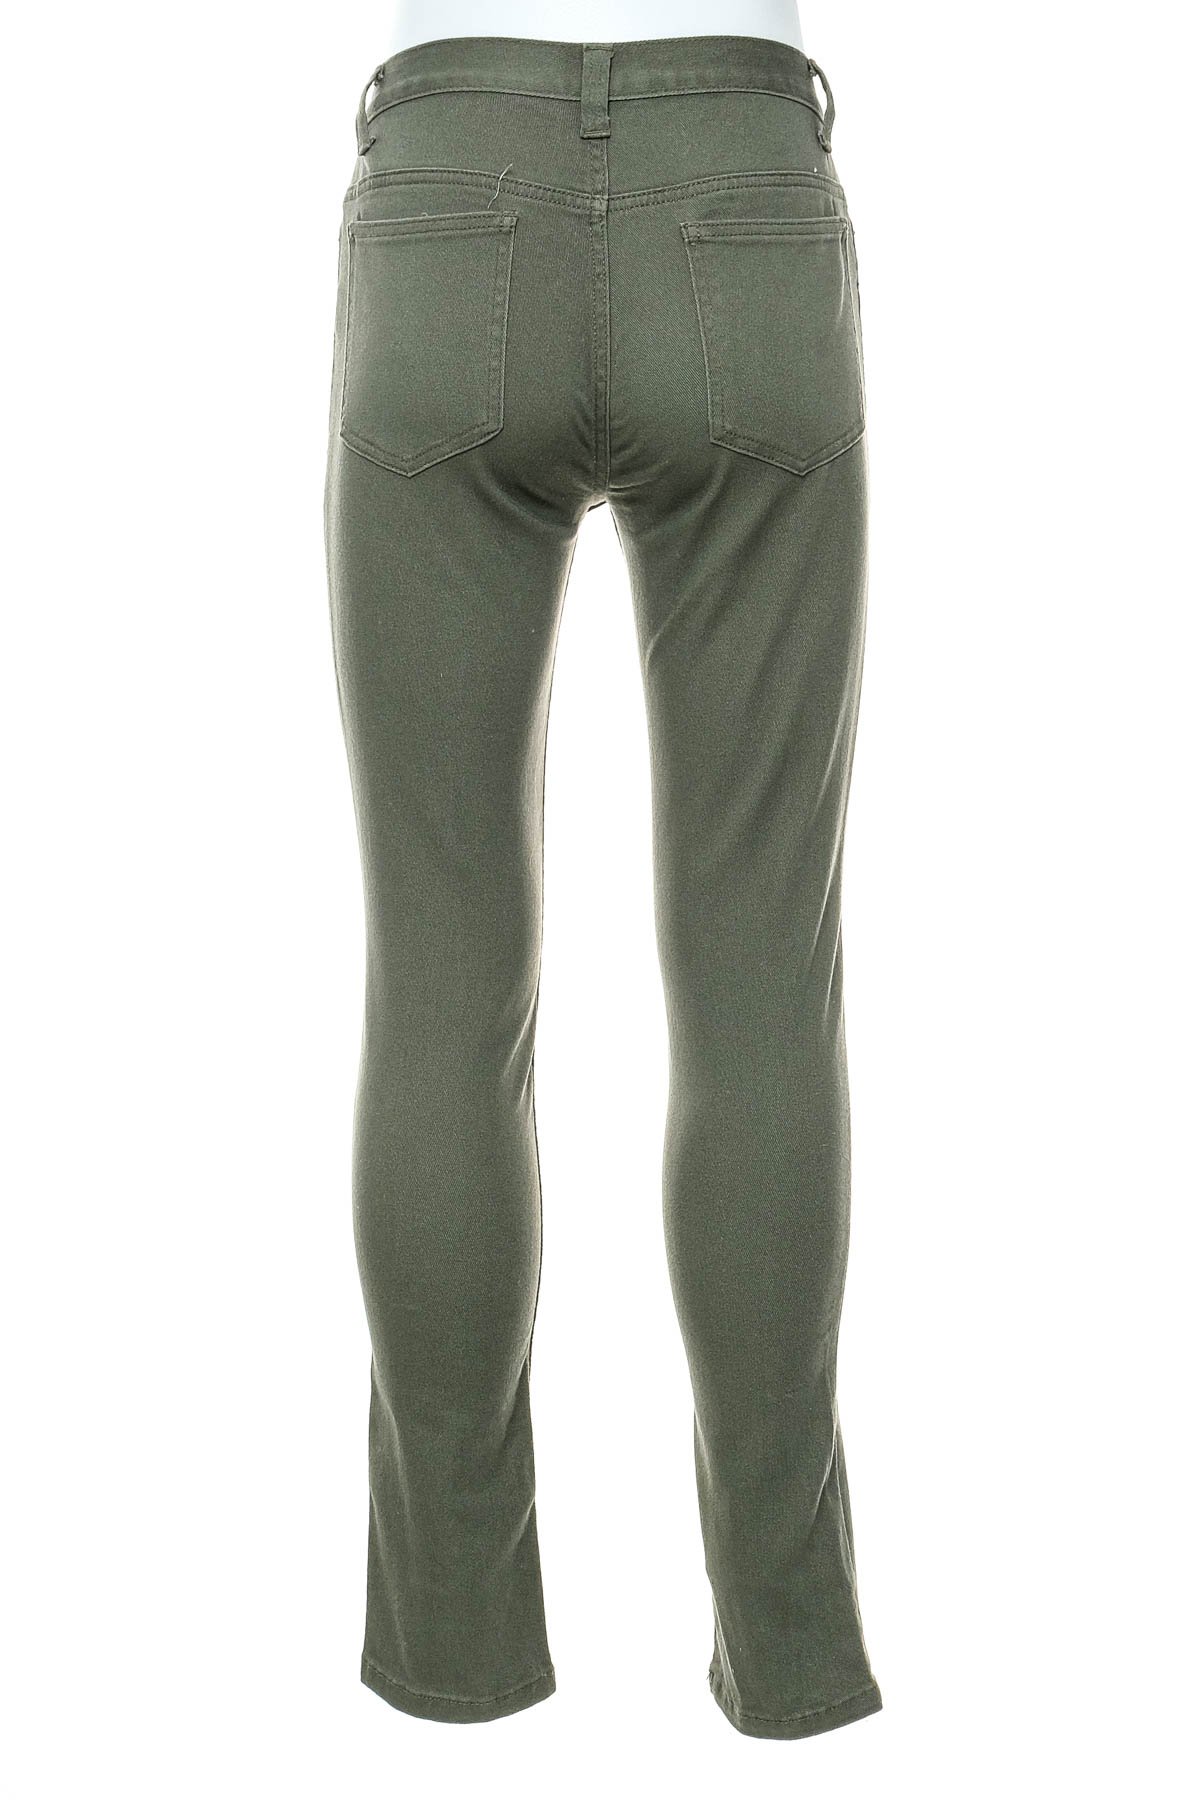 Men's trousers - Denim Co - 1